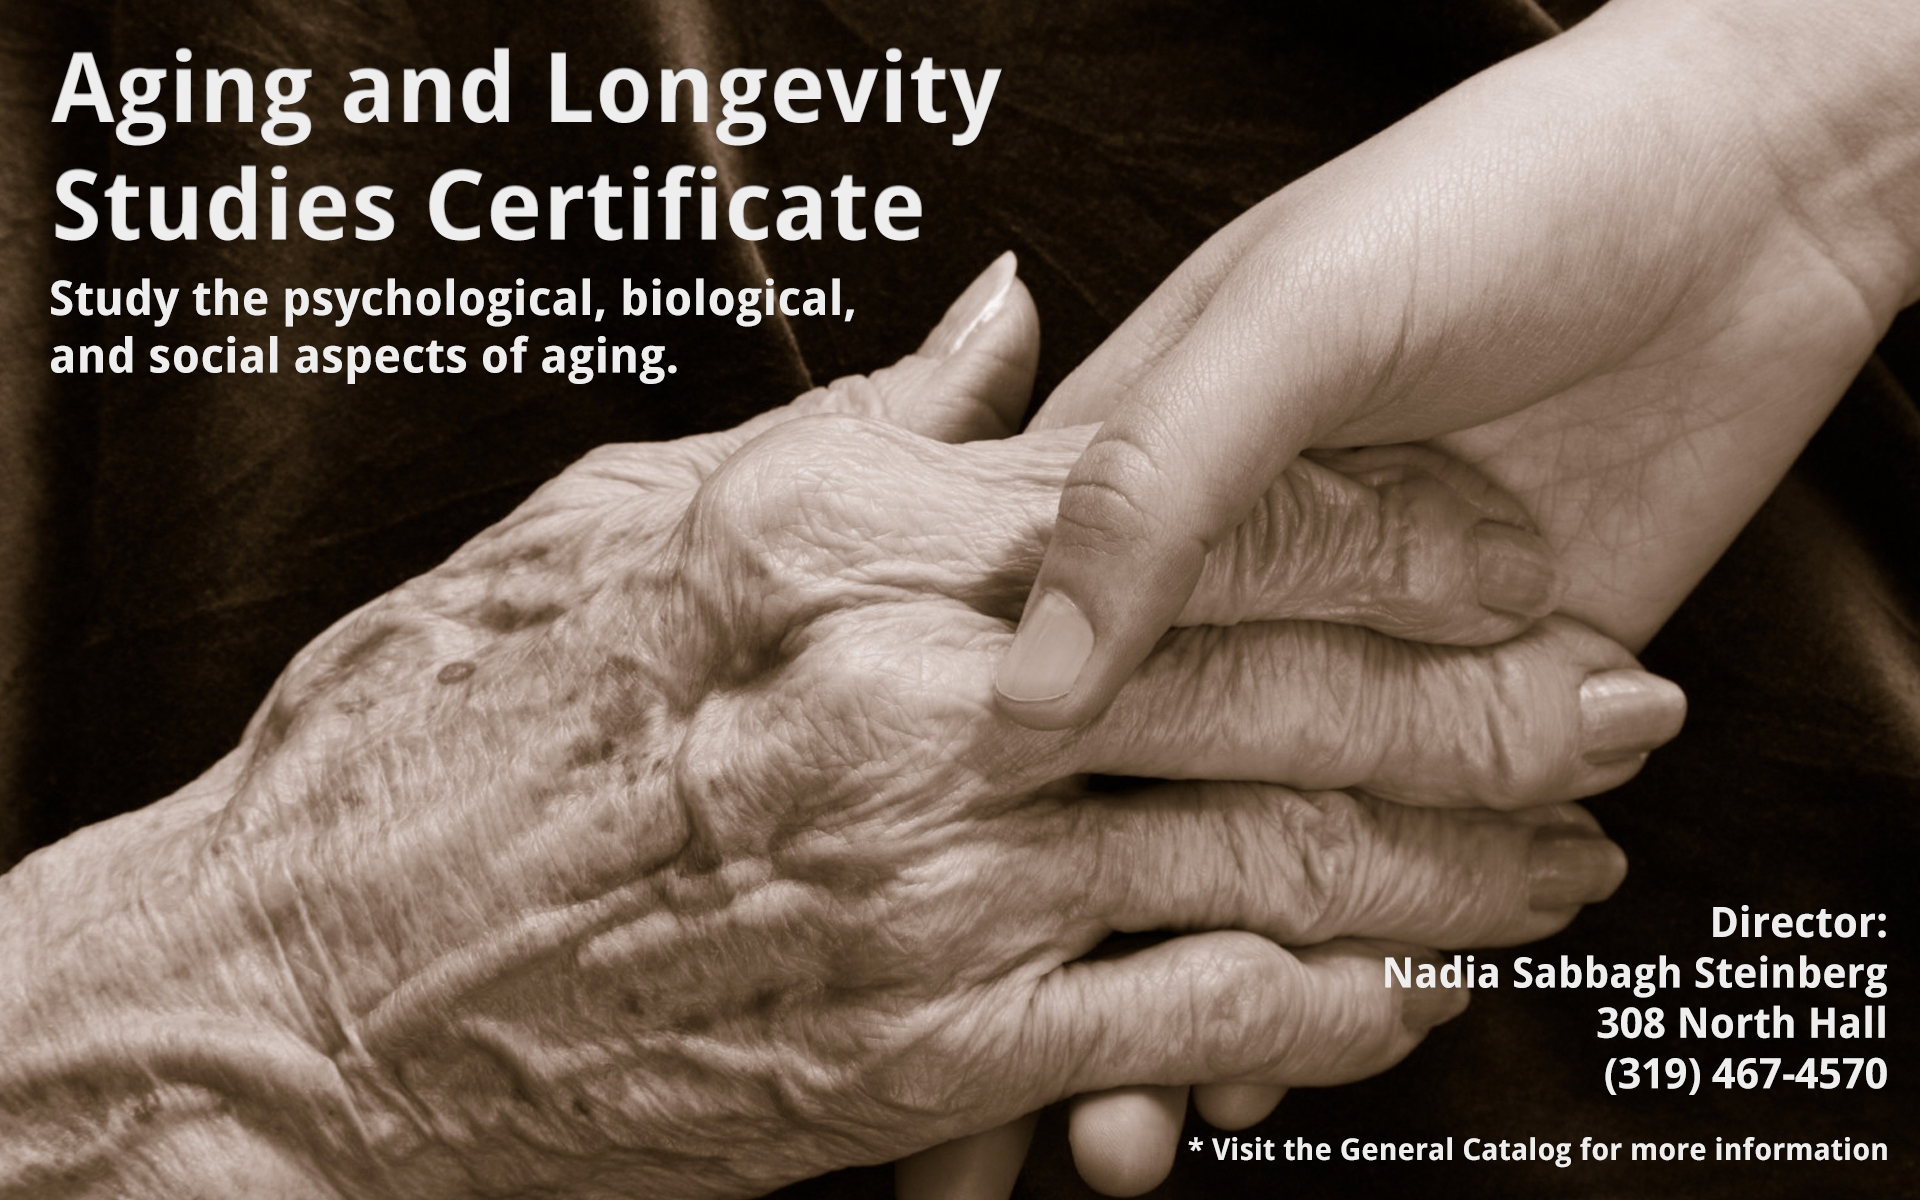 Aging and Longevity Studies Certificate